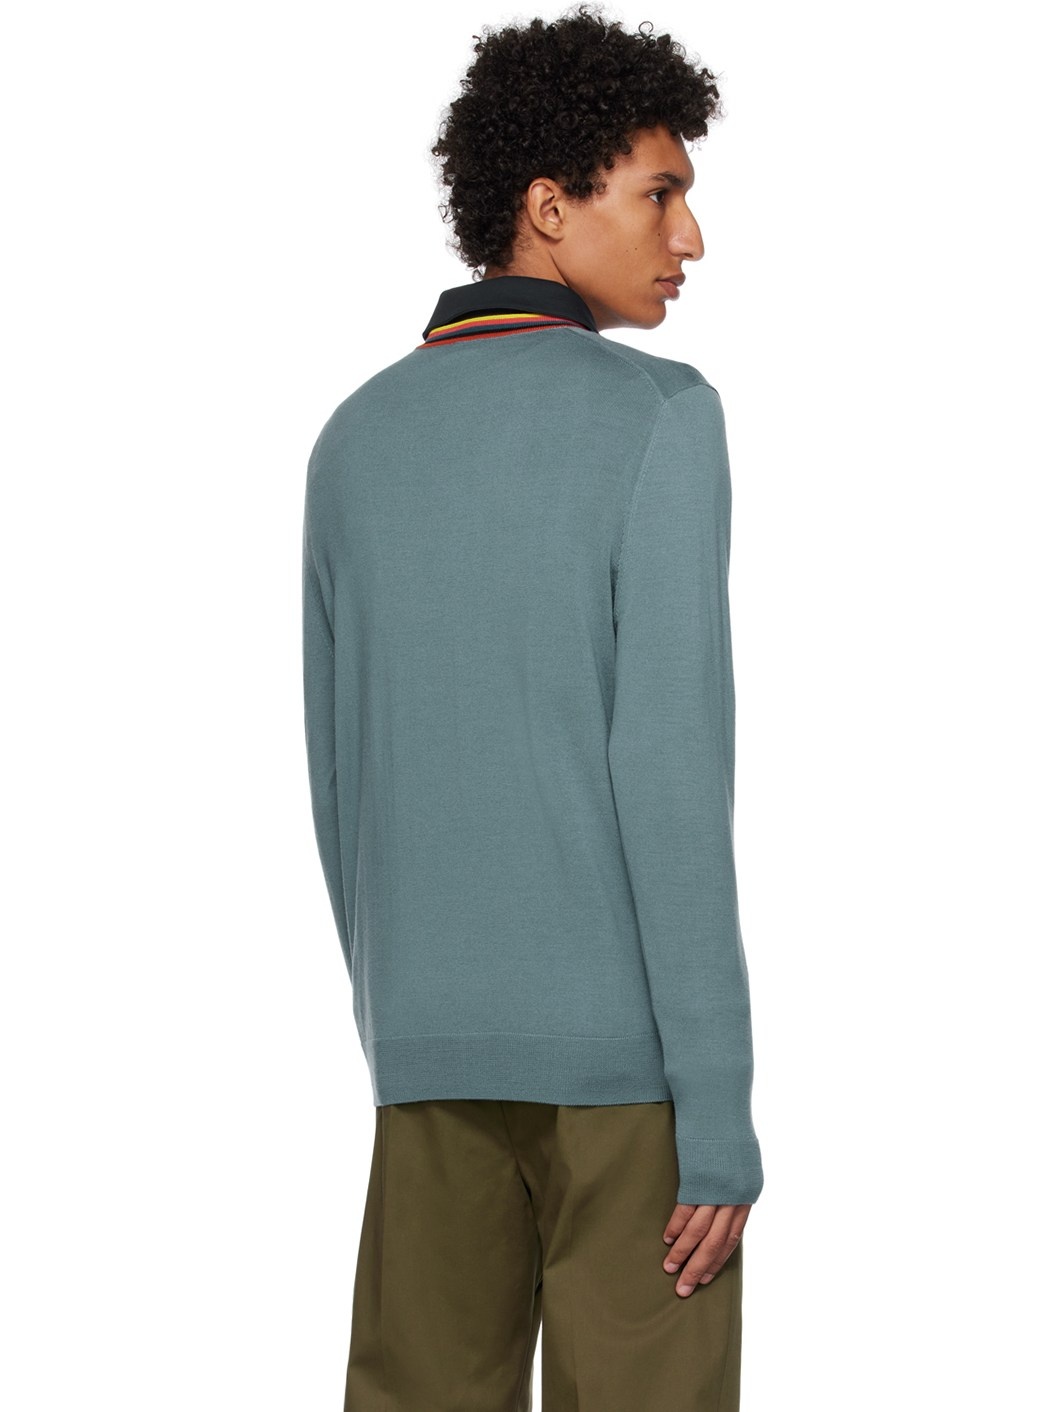 Blue Artist Stripe Sweater - 3